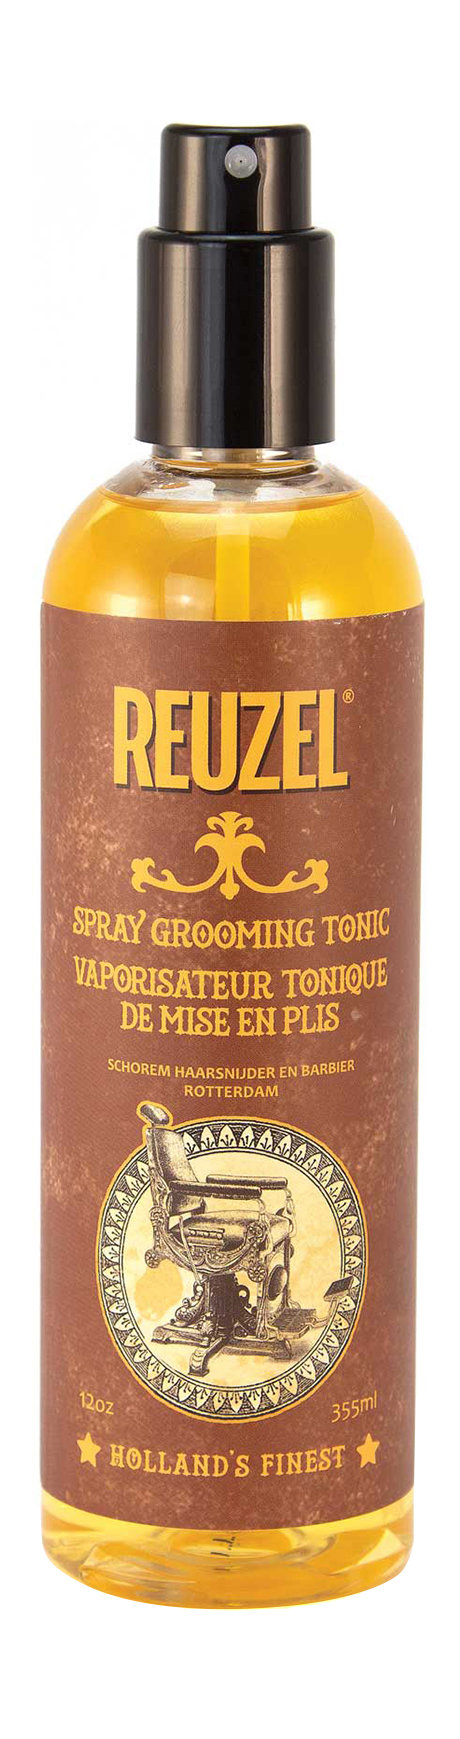 reuzel grooming tonic spray